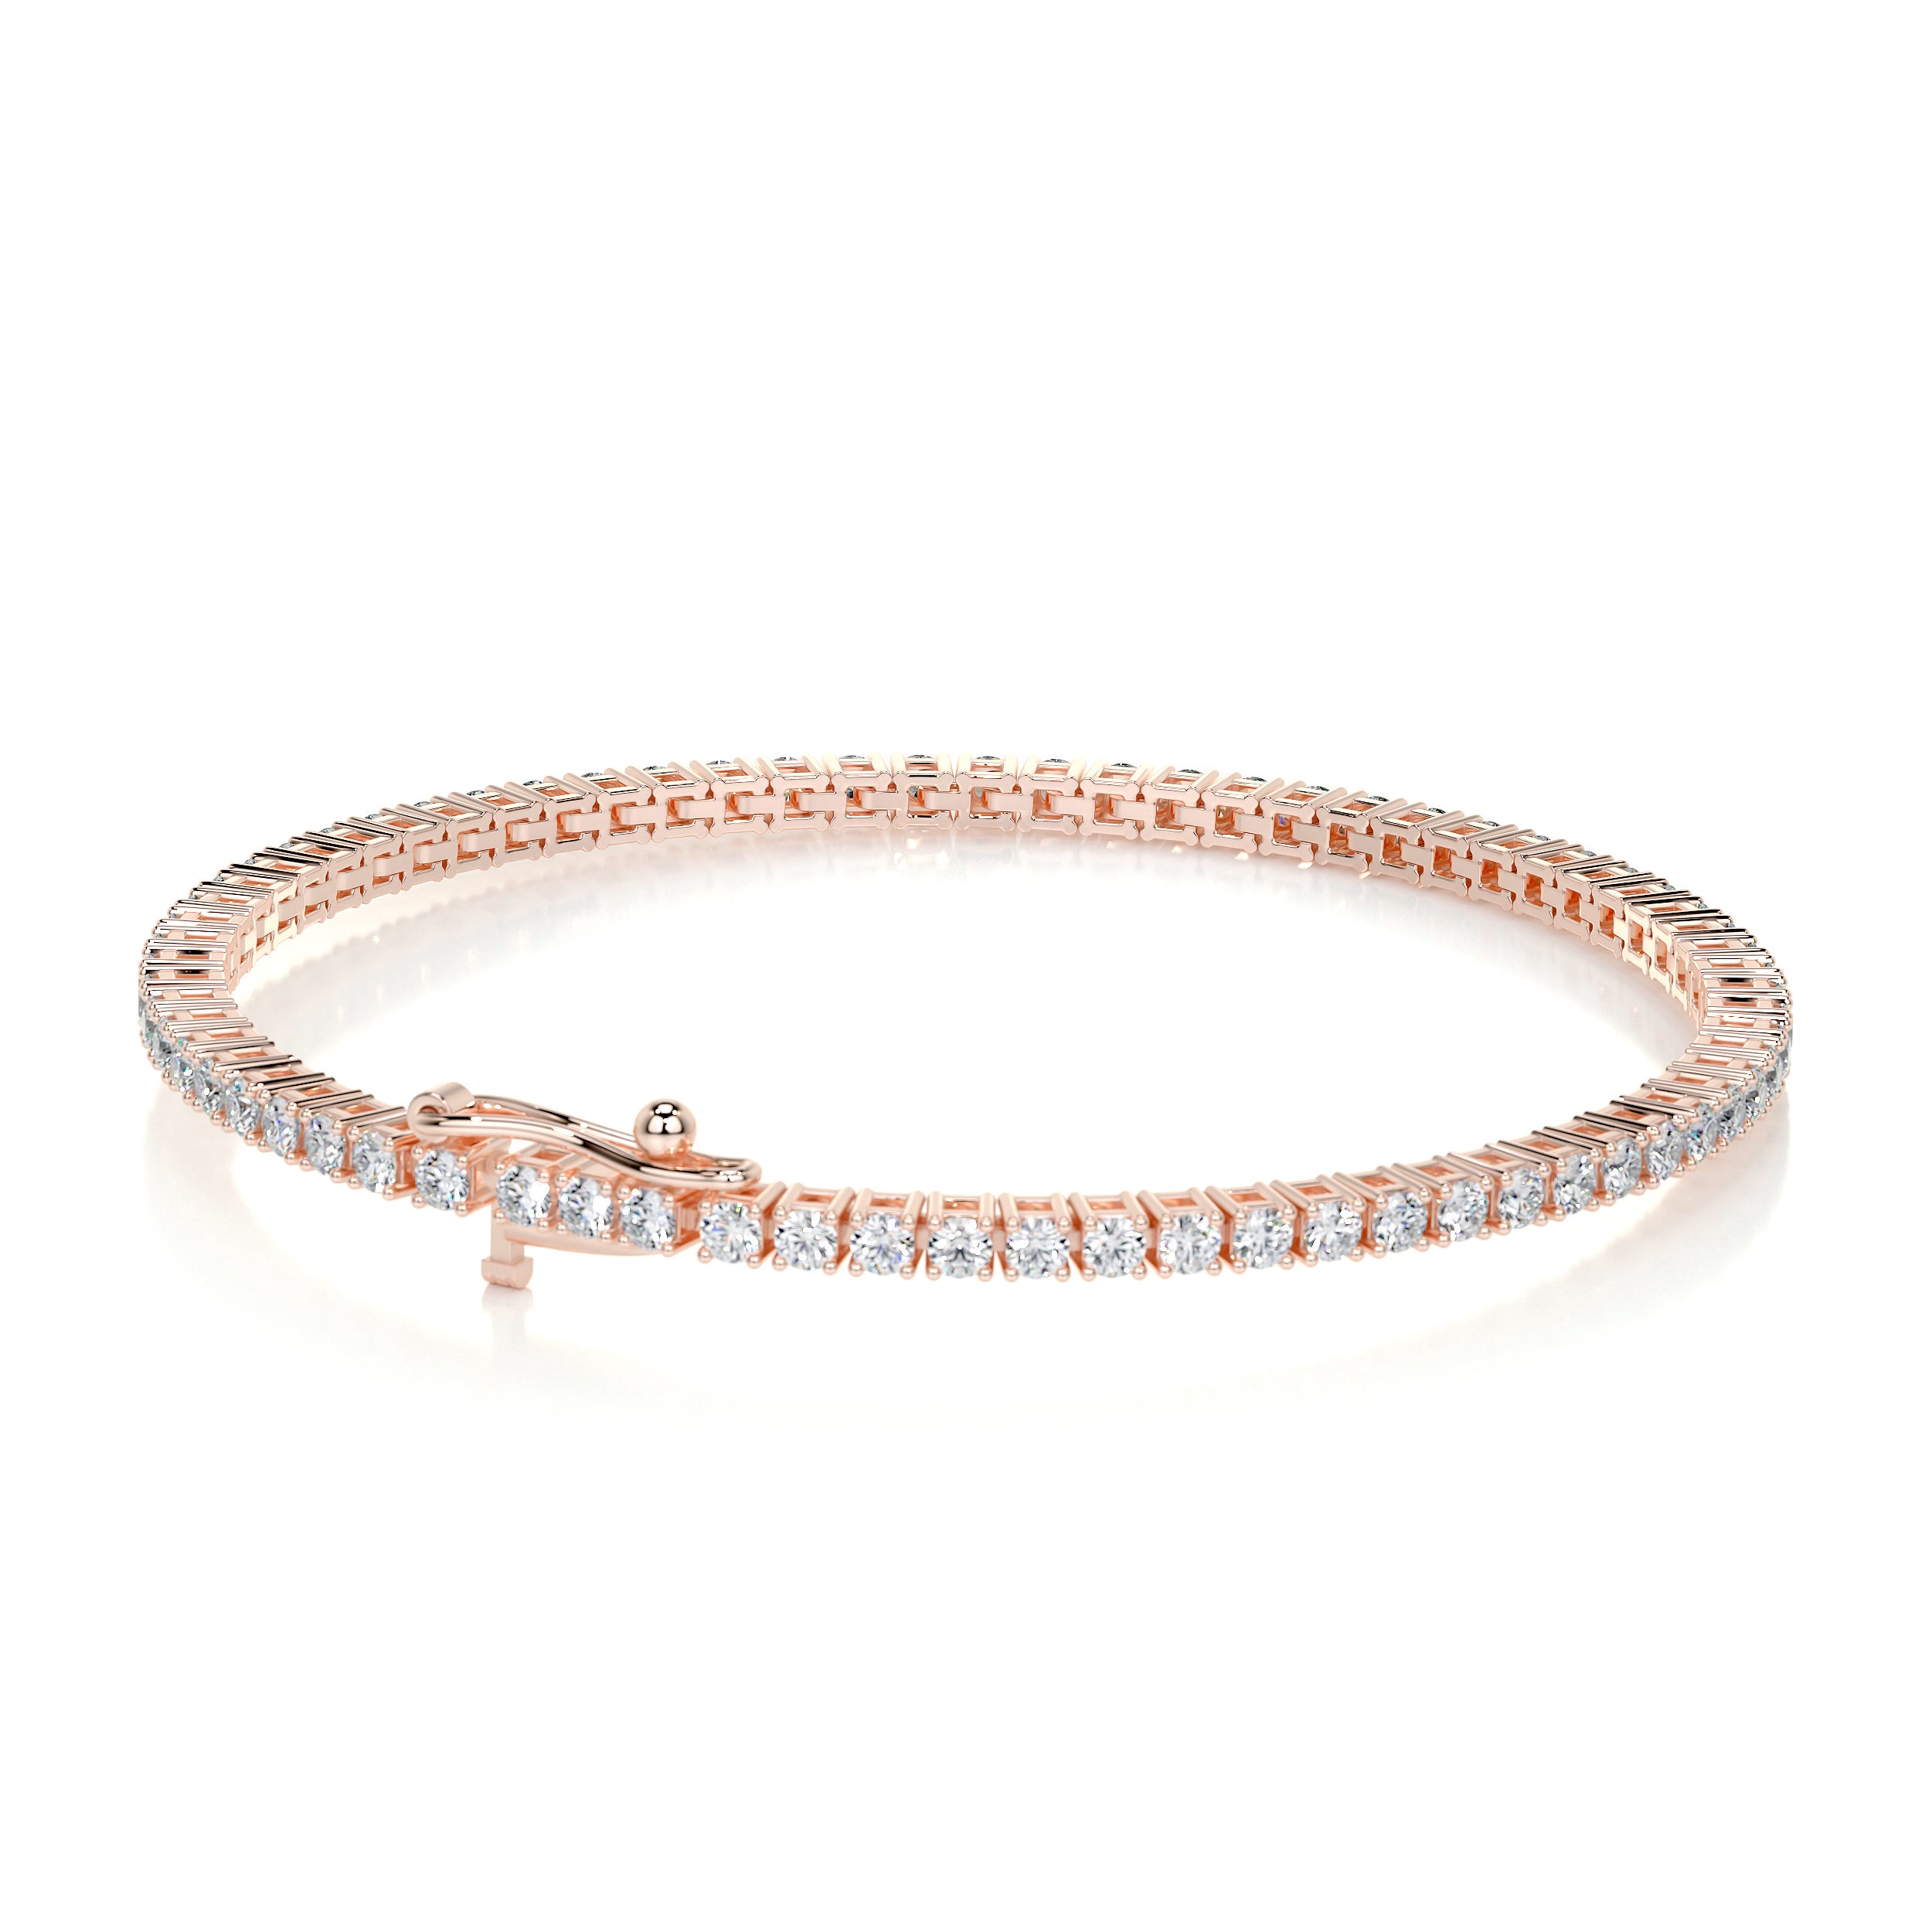 Sidney Tennis Diamonds Bracelet   (2.5 Carat) -14K Rose Gold